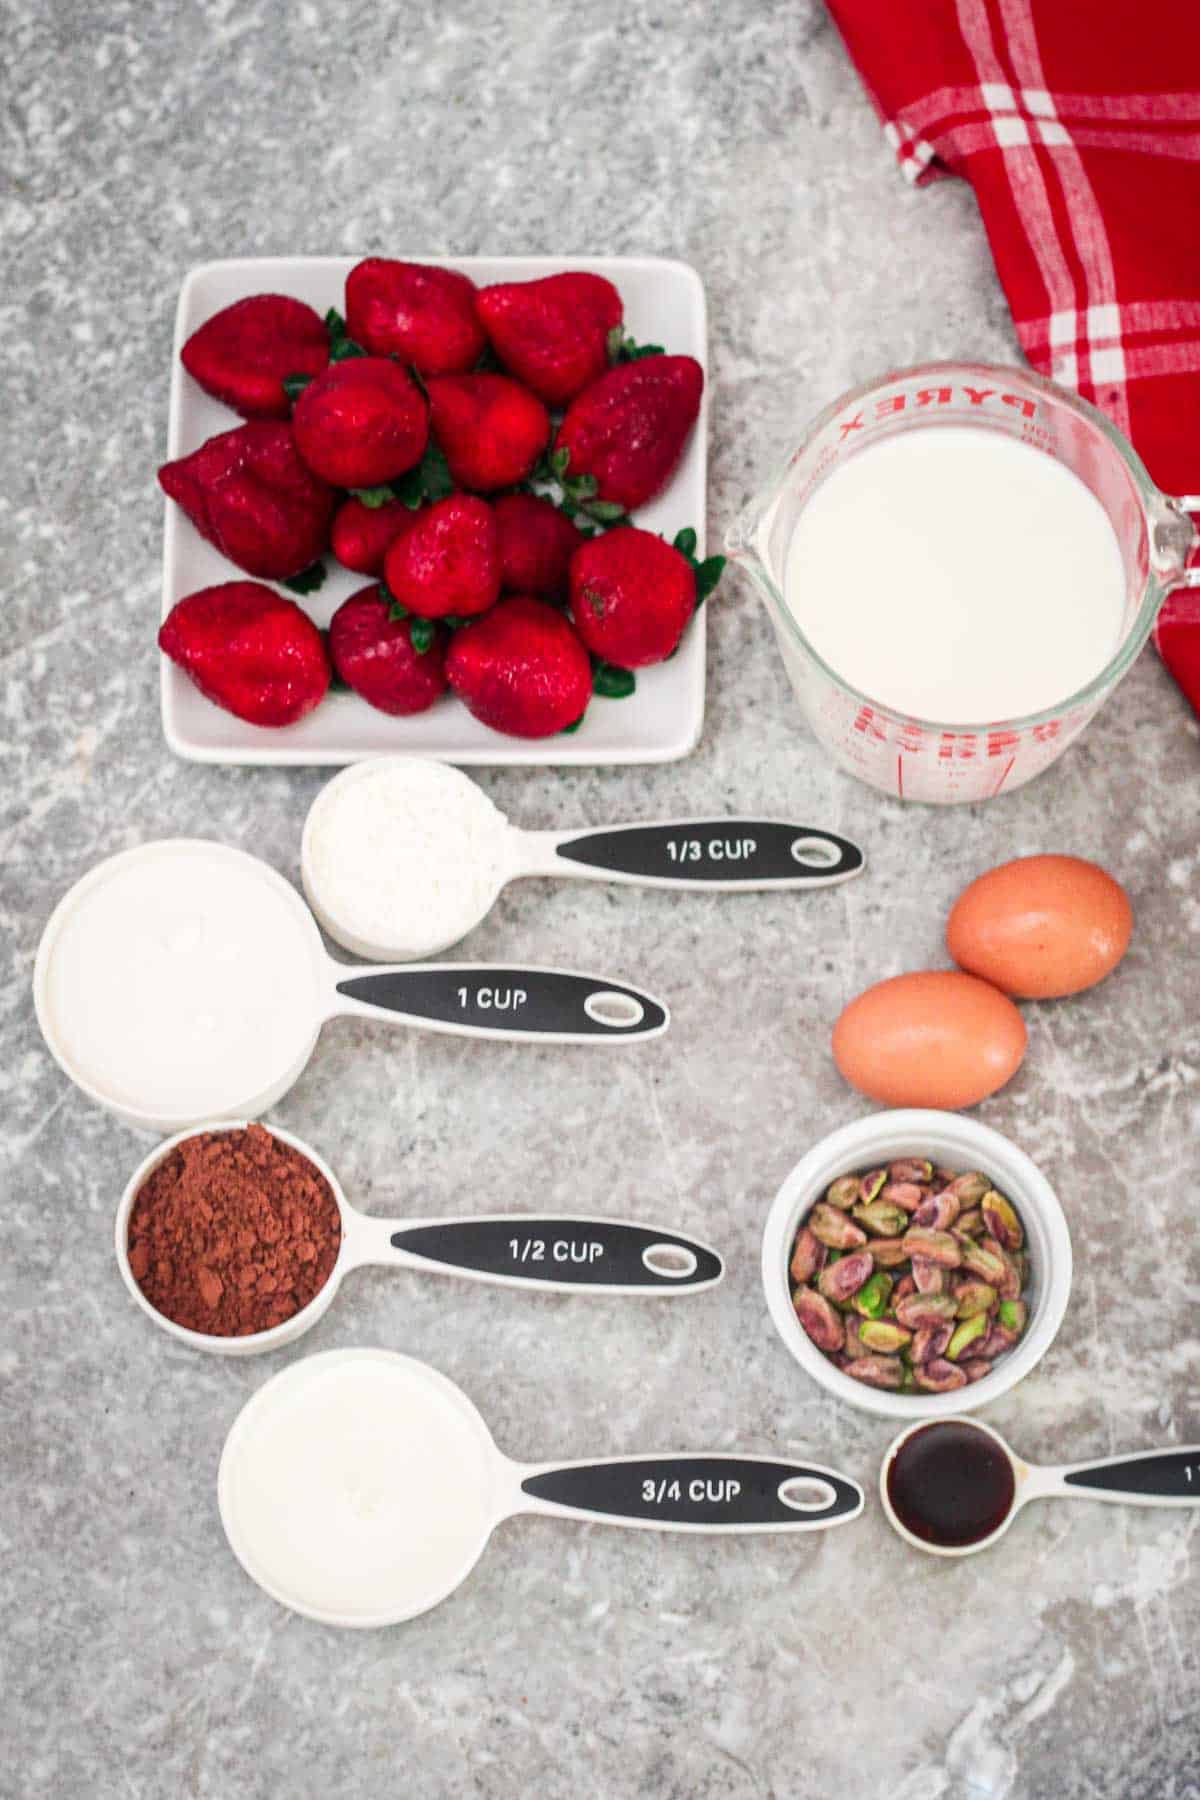 Ingredients for chocolate pudding: strawberries, milk, cornstarch, eggs, sugar, cocoa, pistachios, vanilla extract, and more milk. 